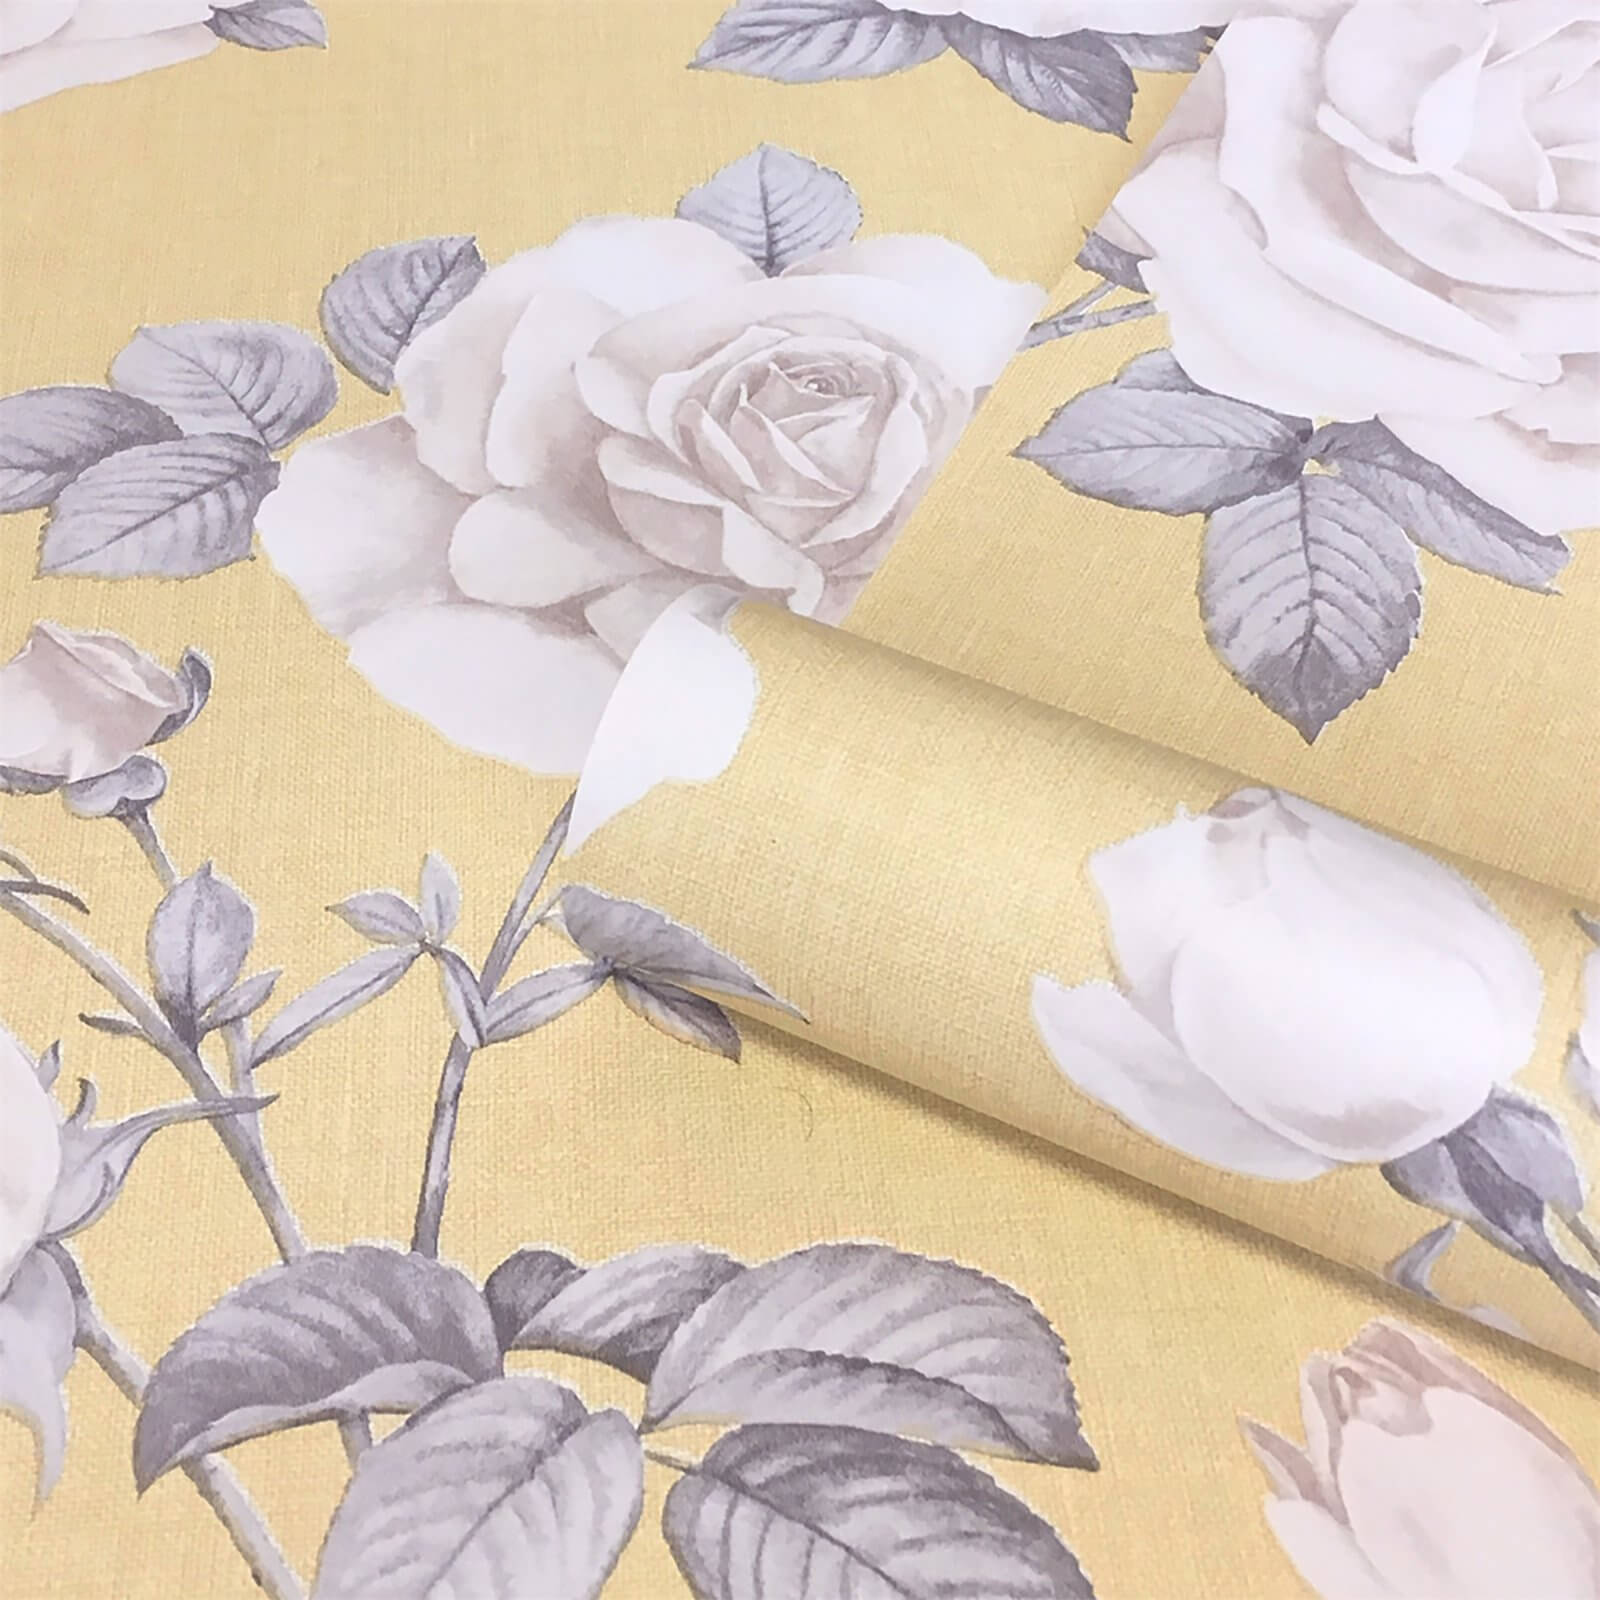 Belgravia Decor Rosa Smooth Yellow Wallpaper